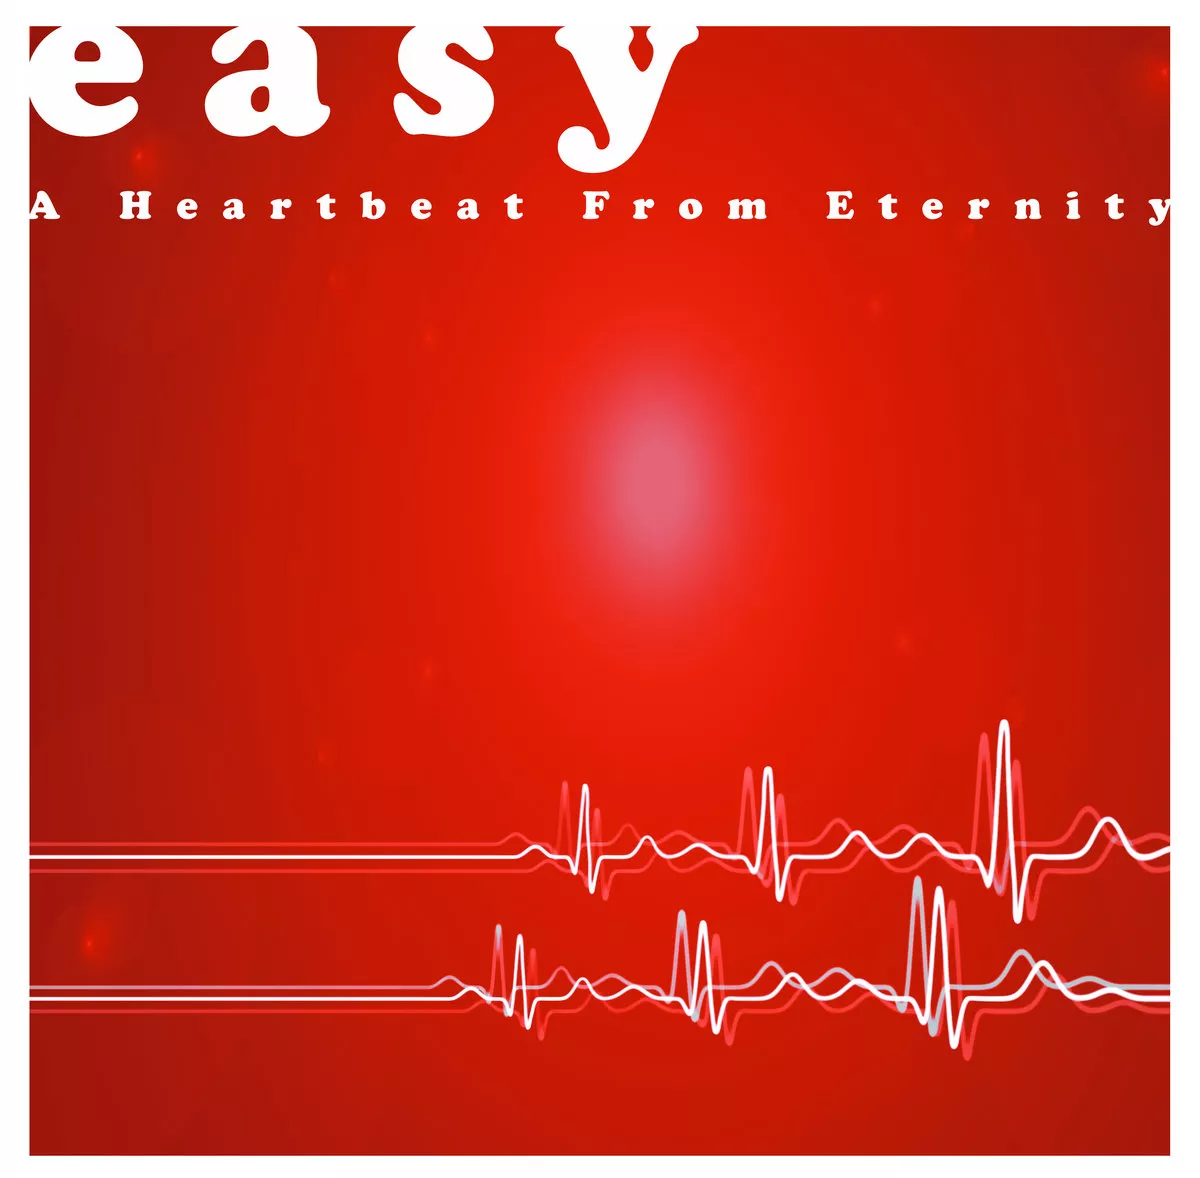 A Heartbeat From Eternity - Easy